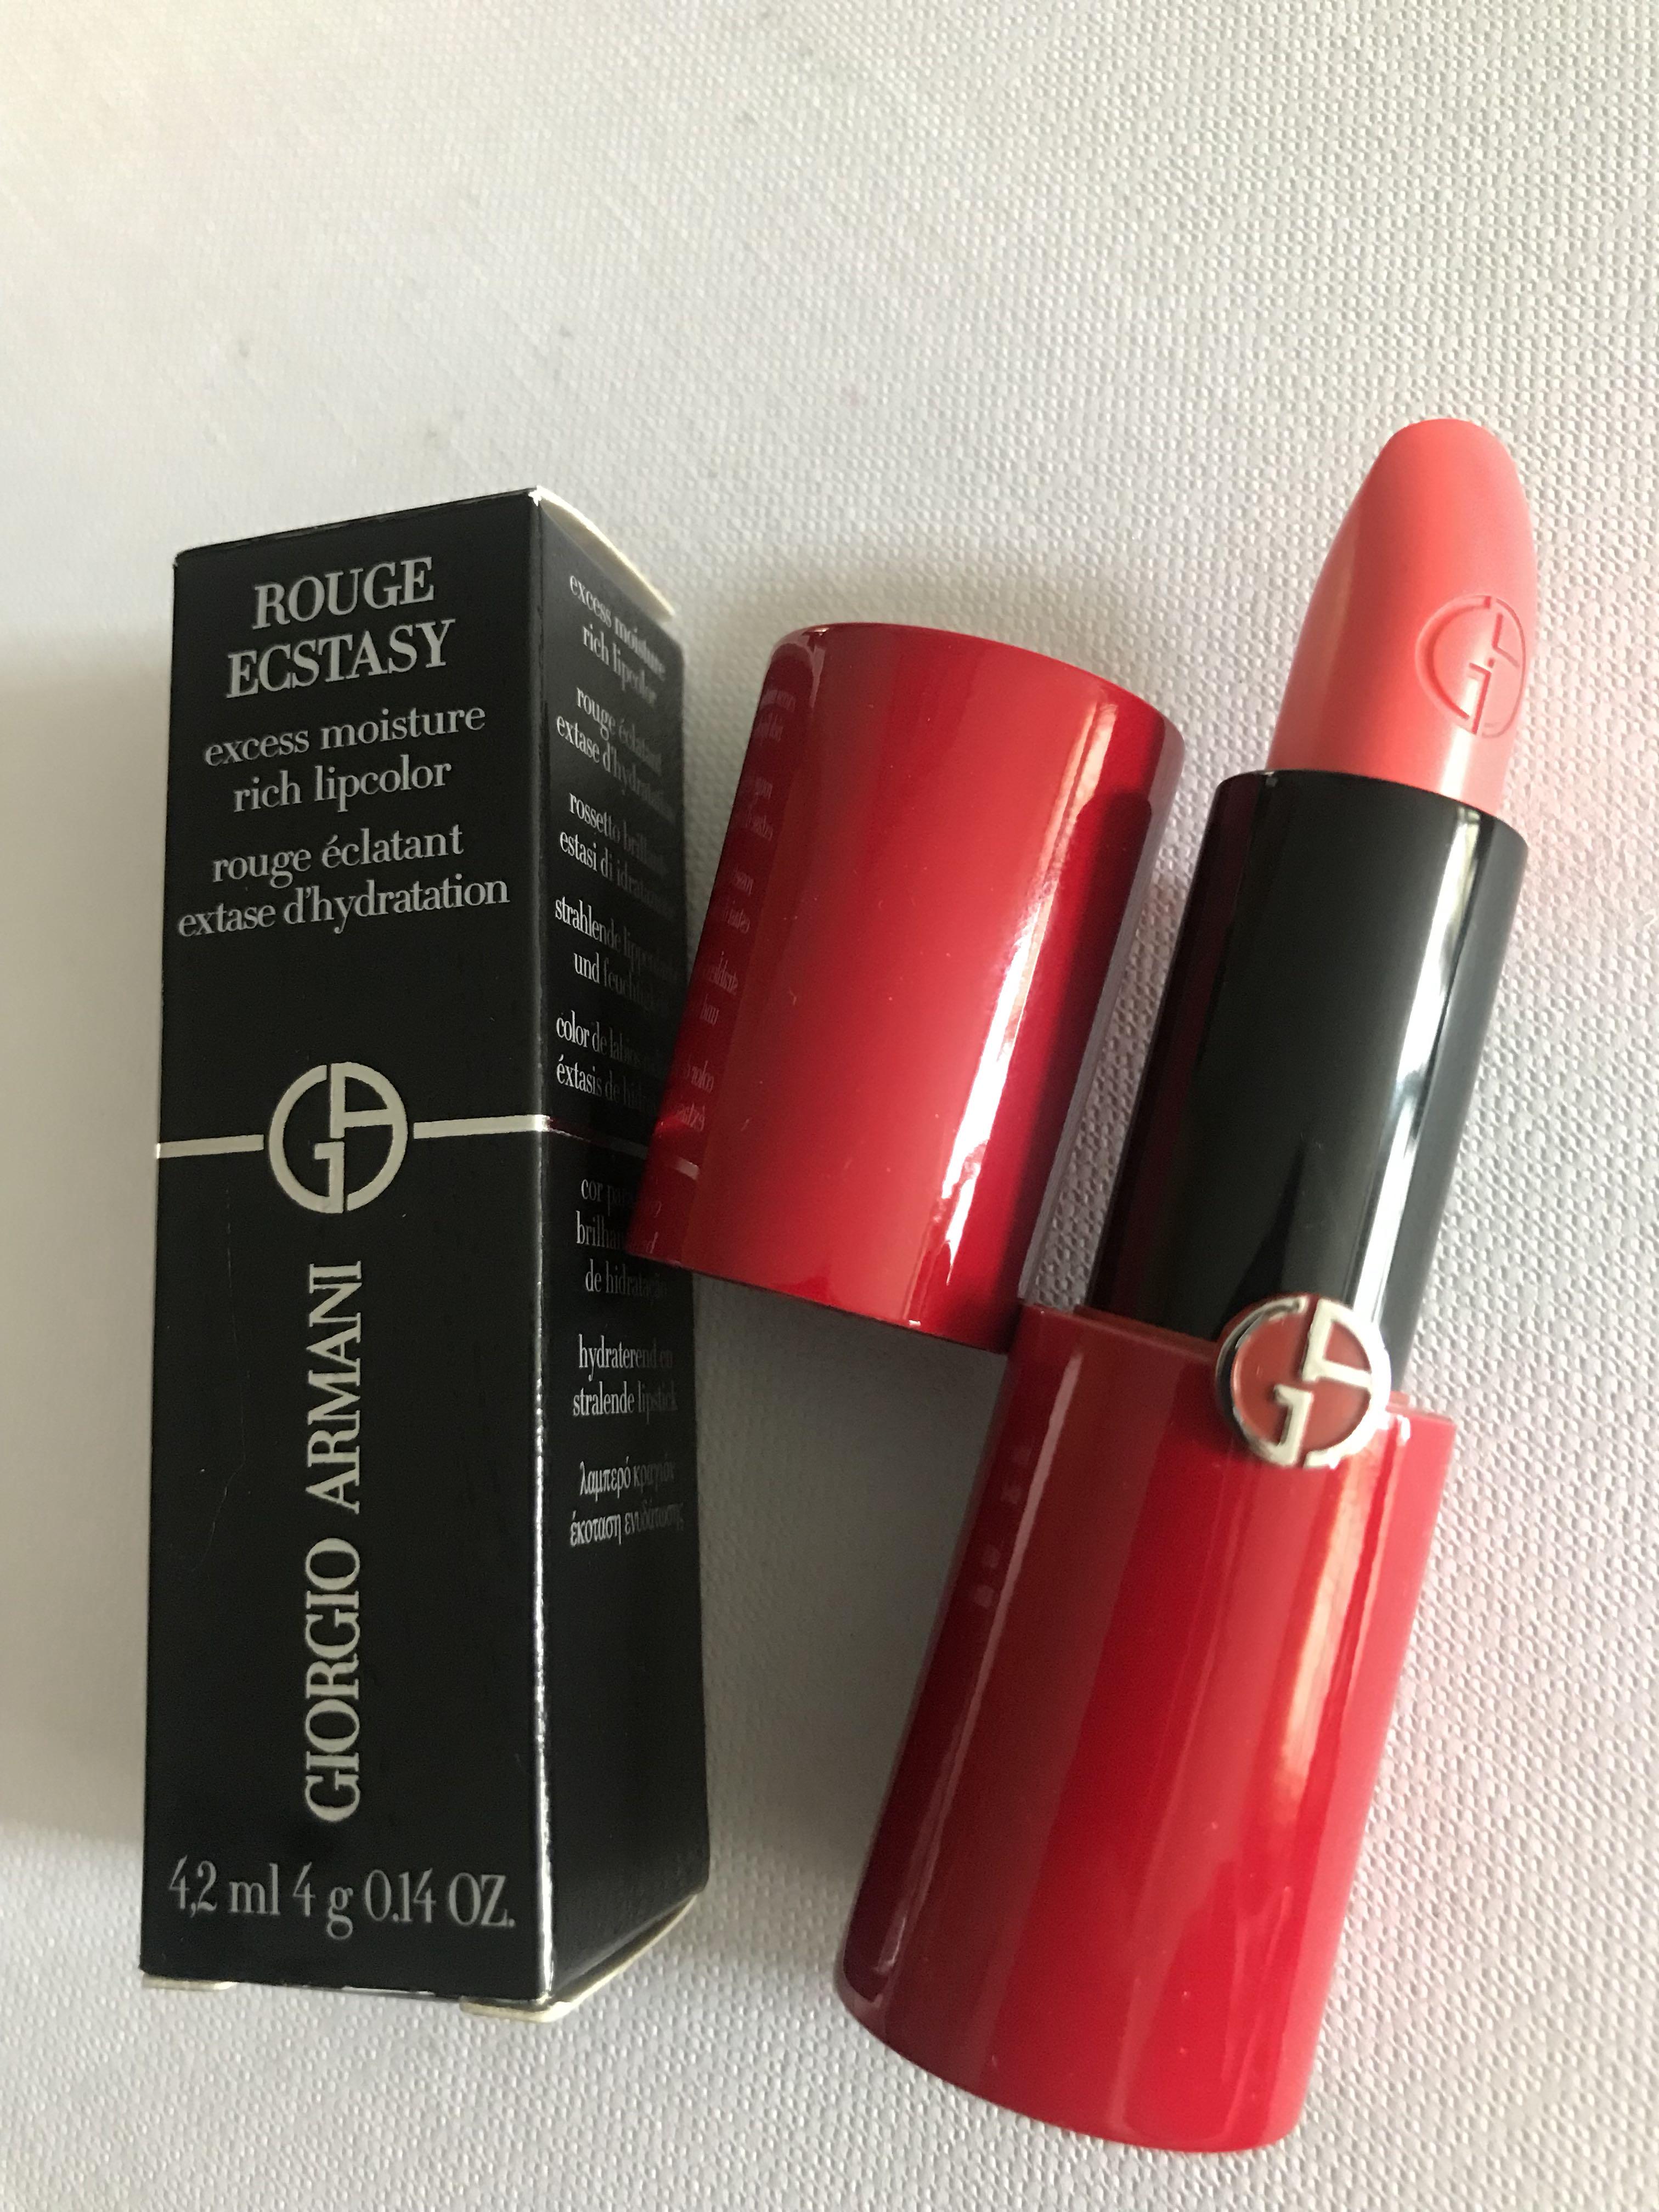 armani lipstick 302